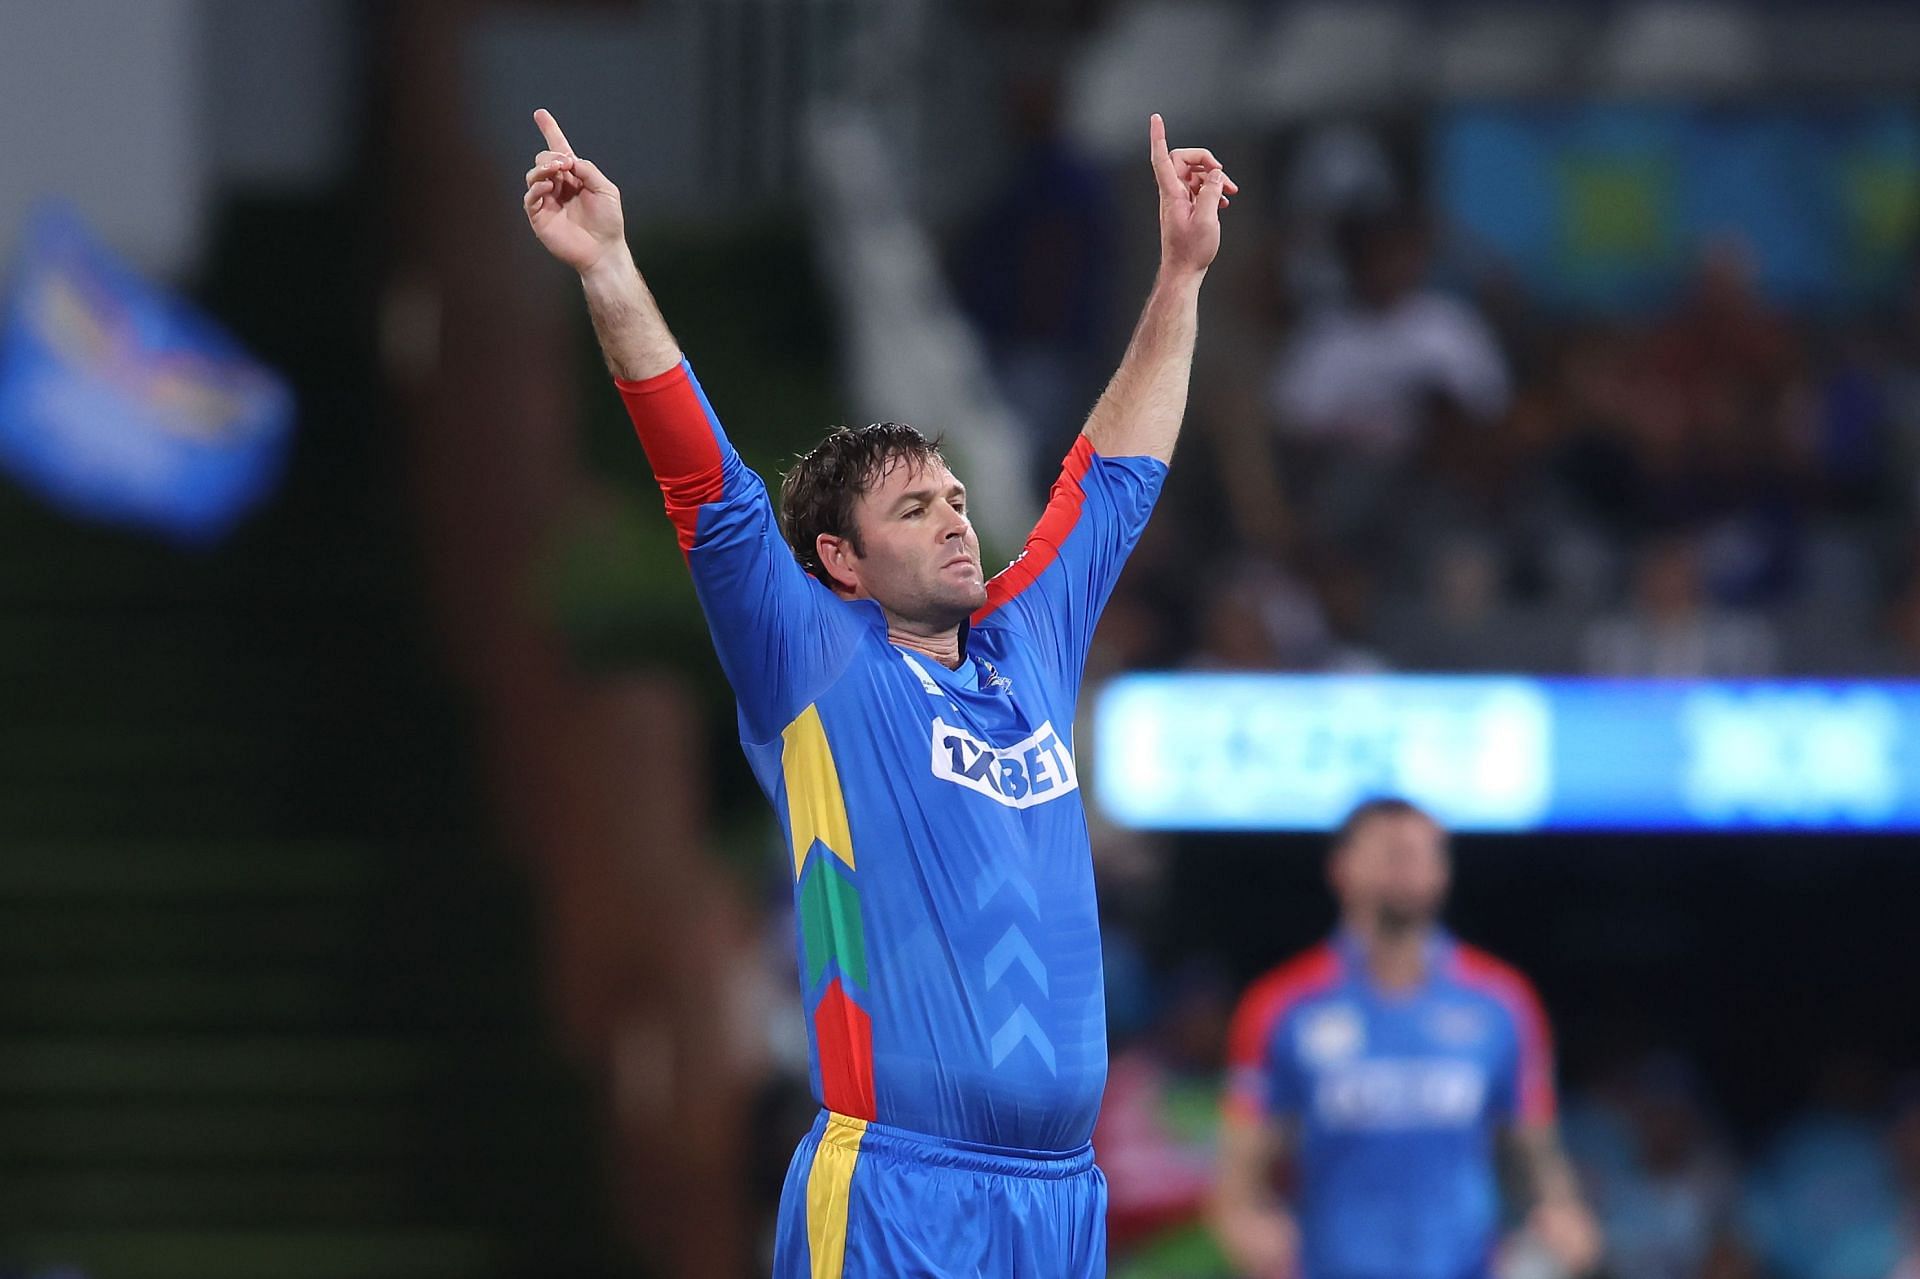 JJ Smuts picks up a wicket against Super Kings (Credits: X/DurbansSG)